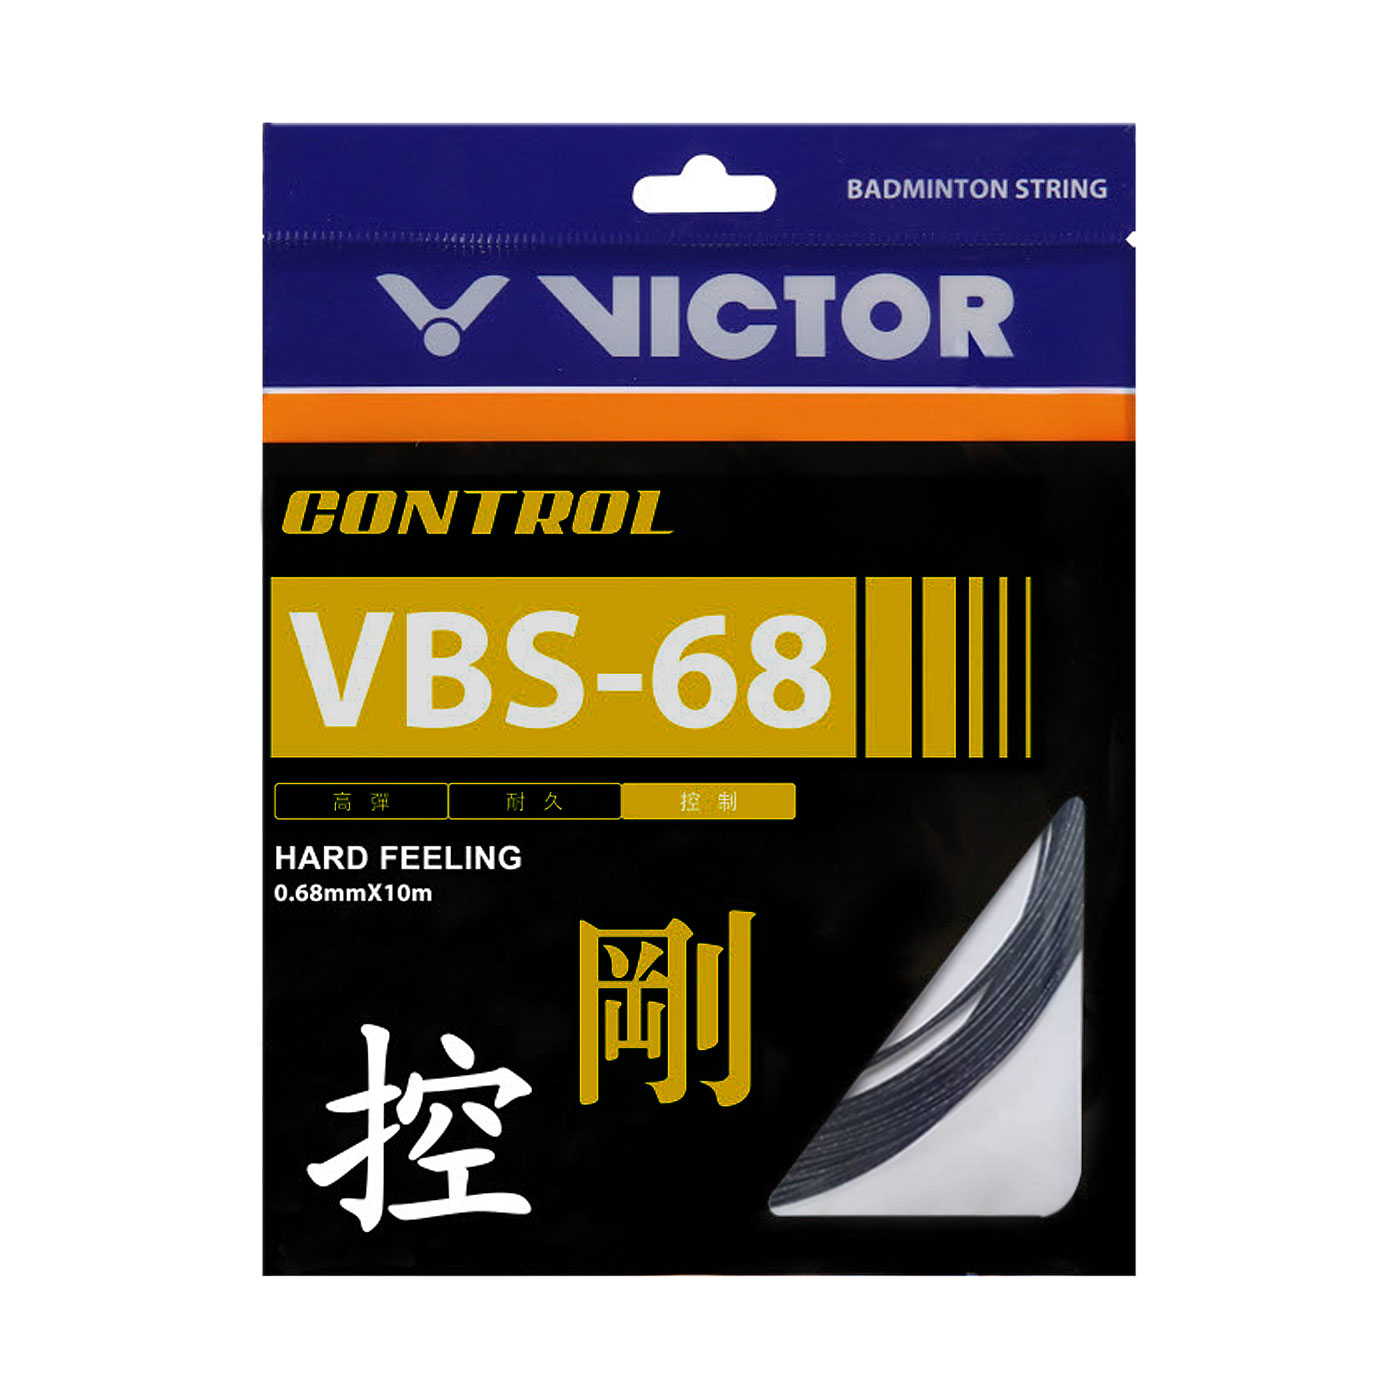 VICTOR 控制羽拍線-剛 VBS-68-A - 黑